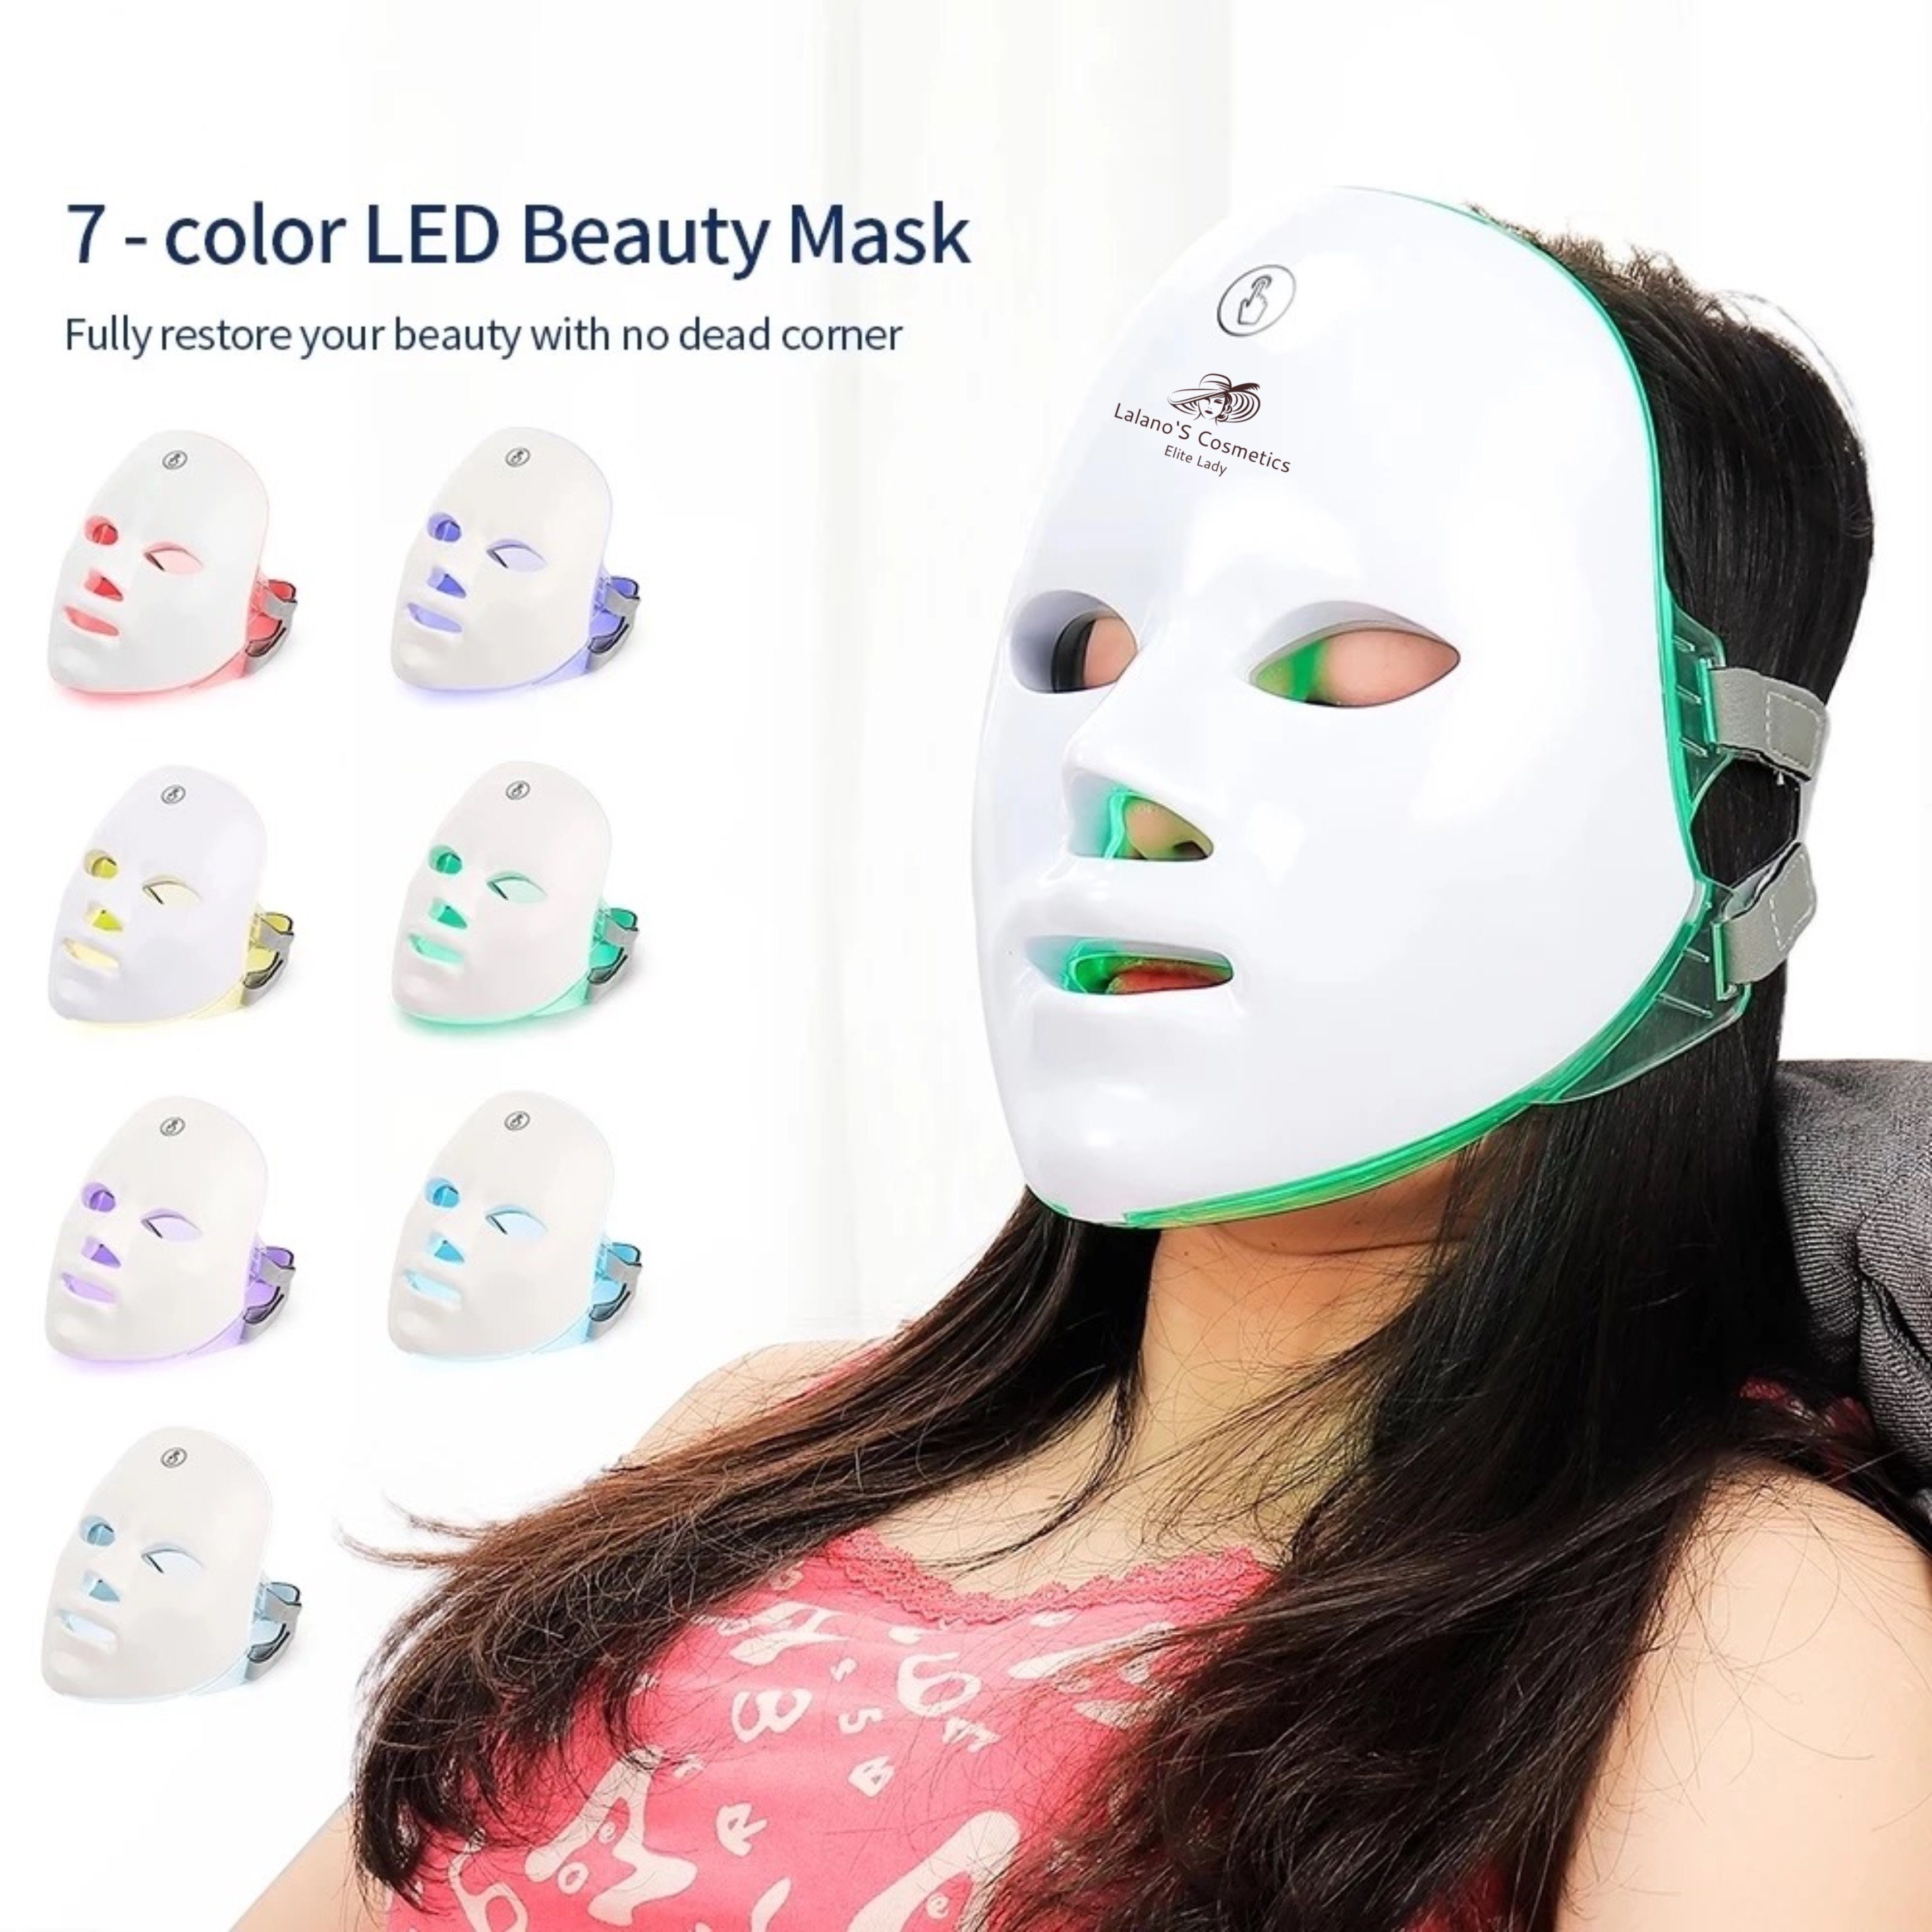 Gesichtsmaske, Kosmetikbehandlungsgerät Gerät Gesichtsreinigung, One-Touch facial Gesichtsstraffung, Anti-Falten, EMS, zur Cosmetics Lalano`S Bedienung, BeautyMaske, Mikrodermabrasionsgerät, Mitesserentferner Light Anti-Aging-Gerät, Maske, Porenreiniger, LED-Photon LED